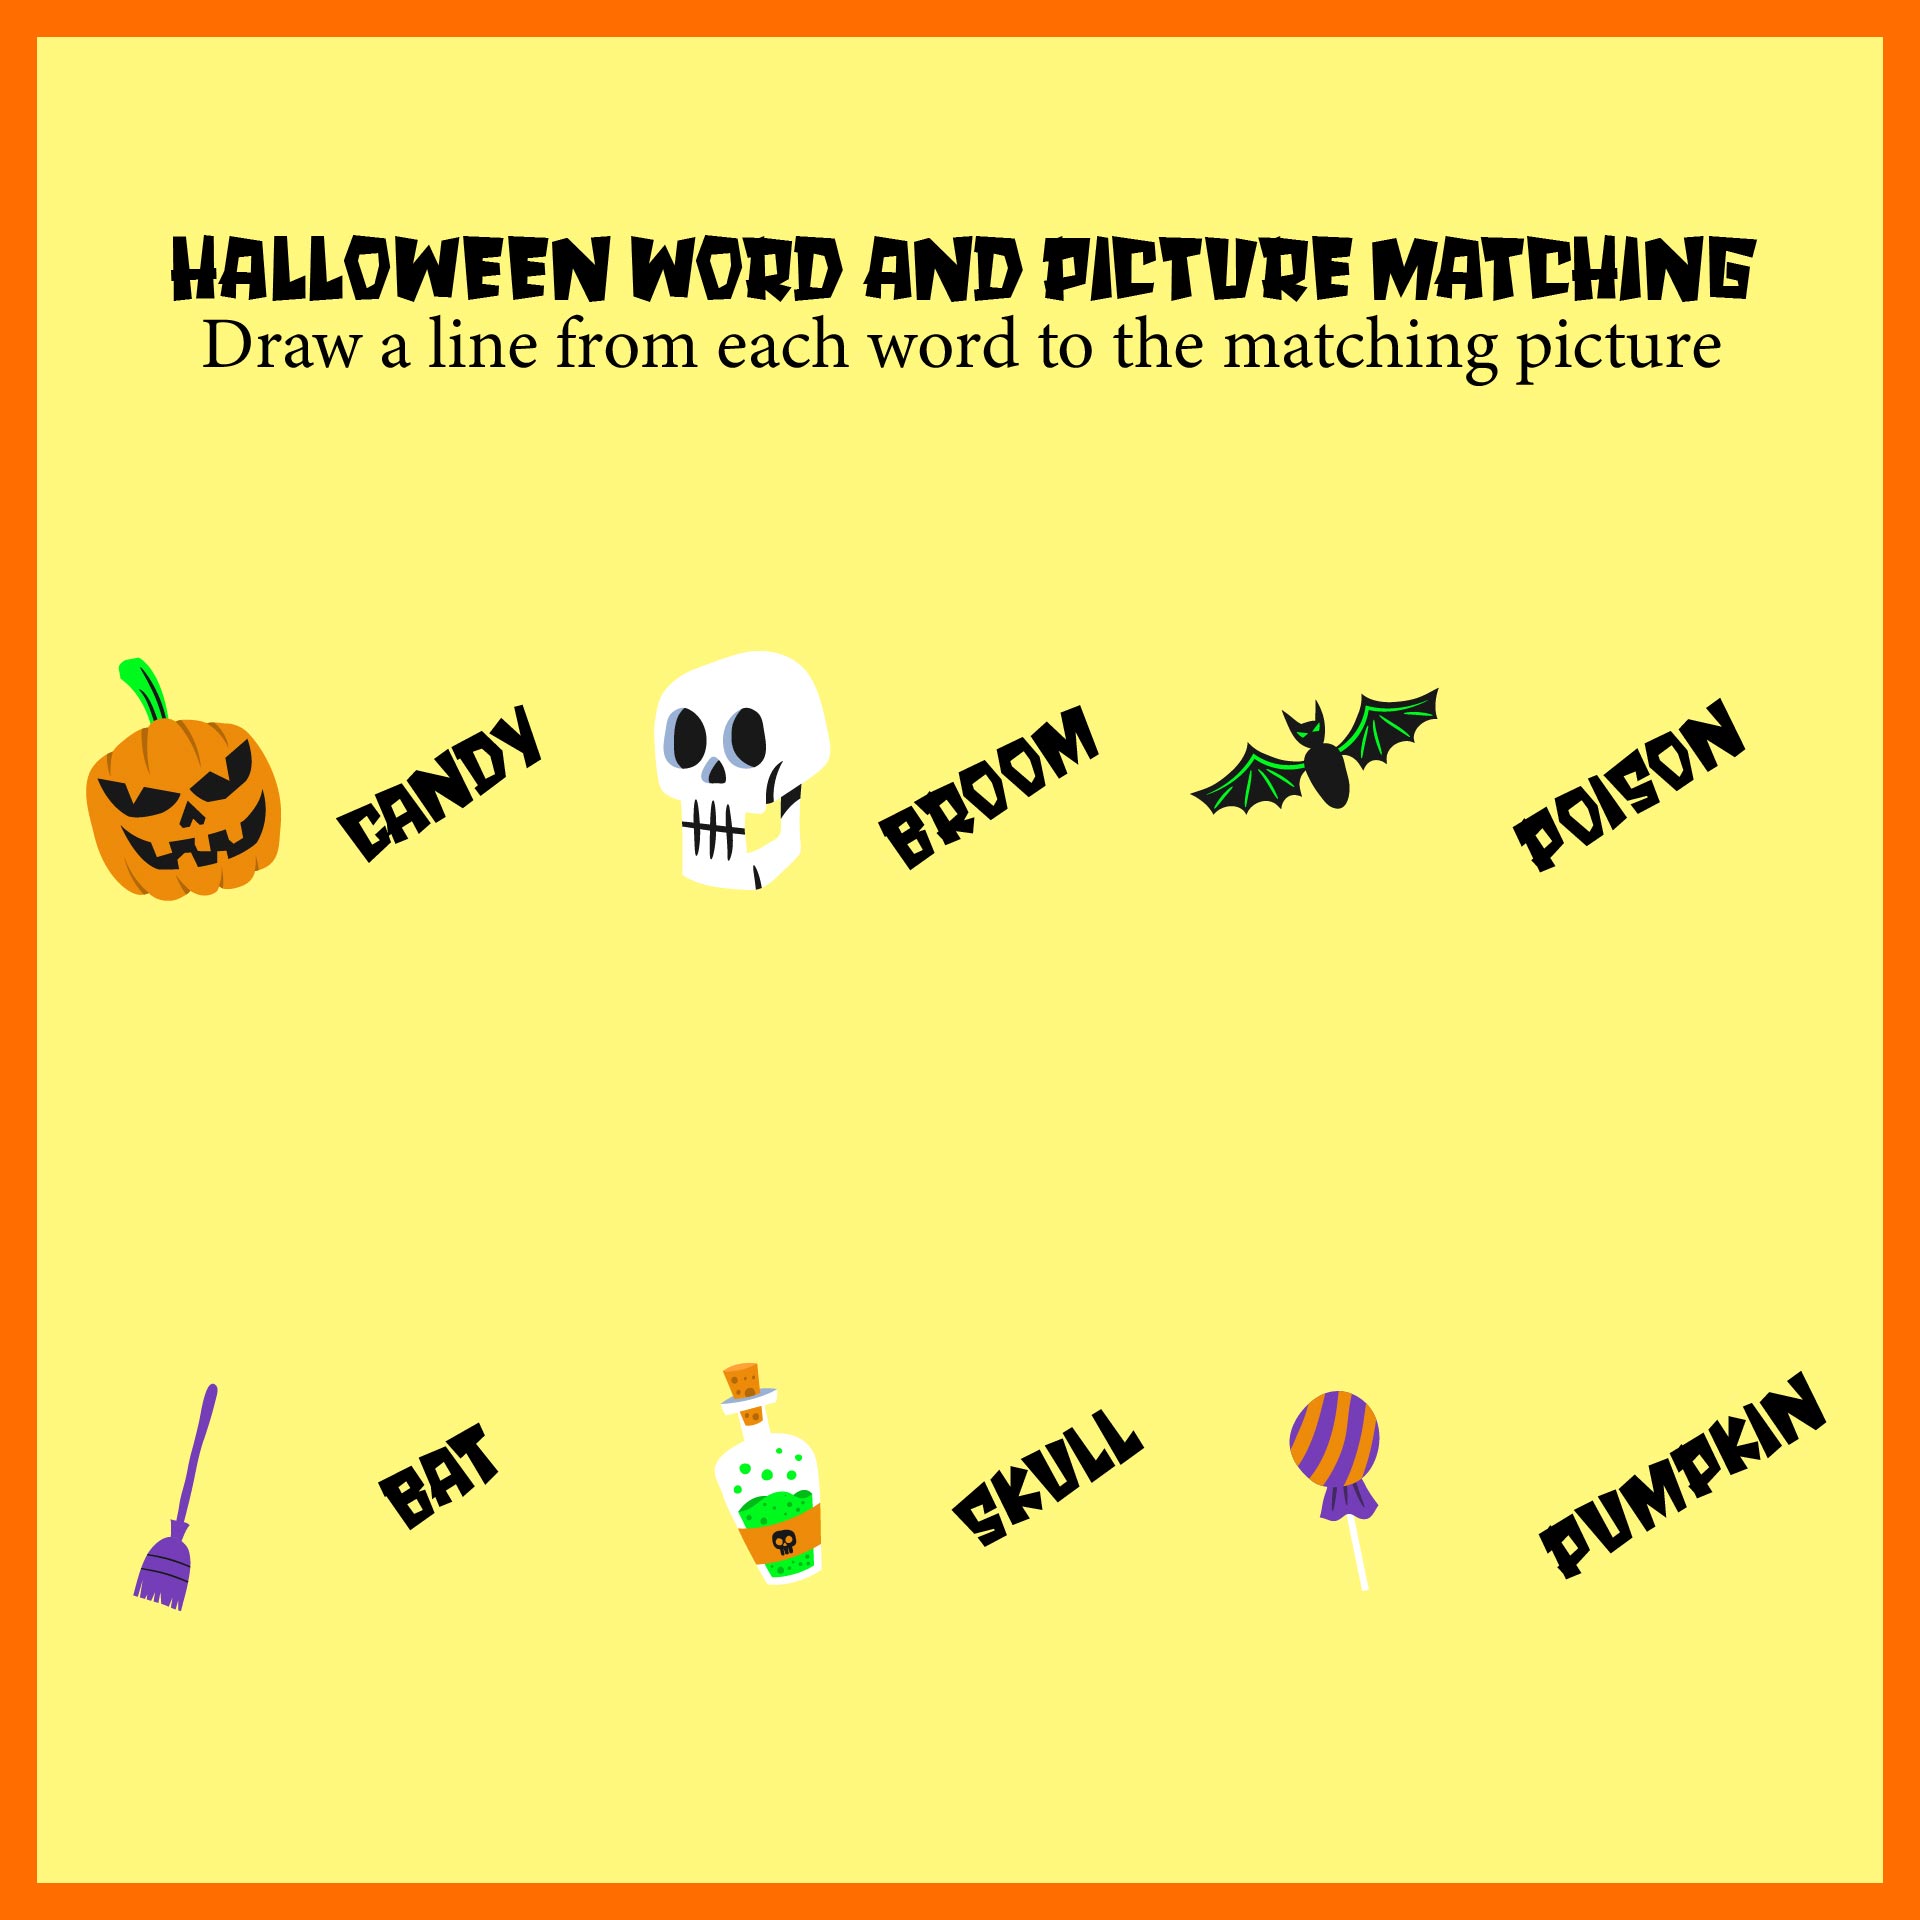 Free Printable Halloween Phonics Worksheets Printable Templates